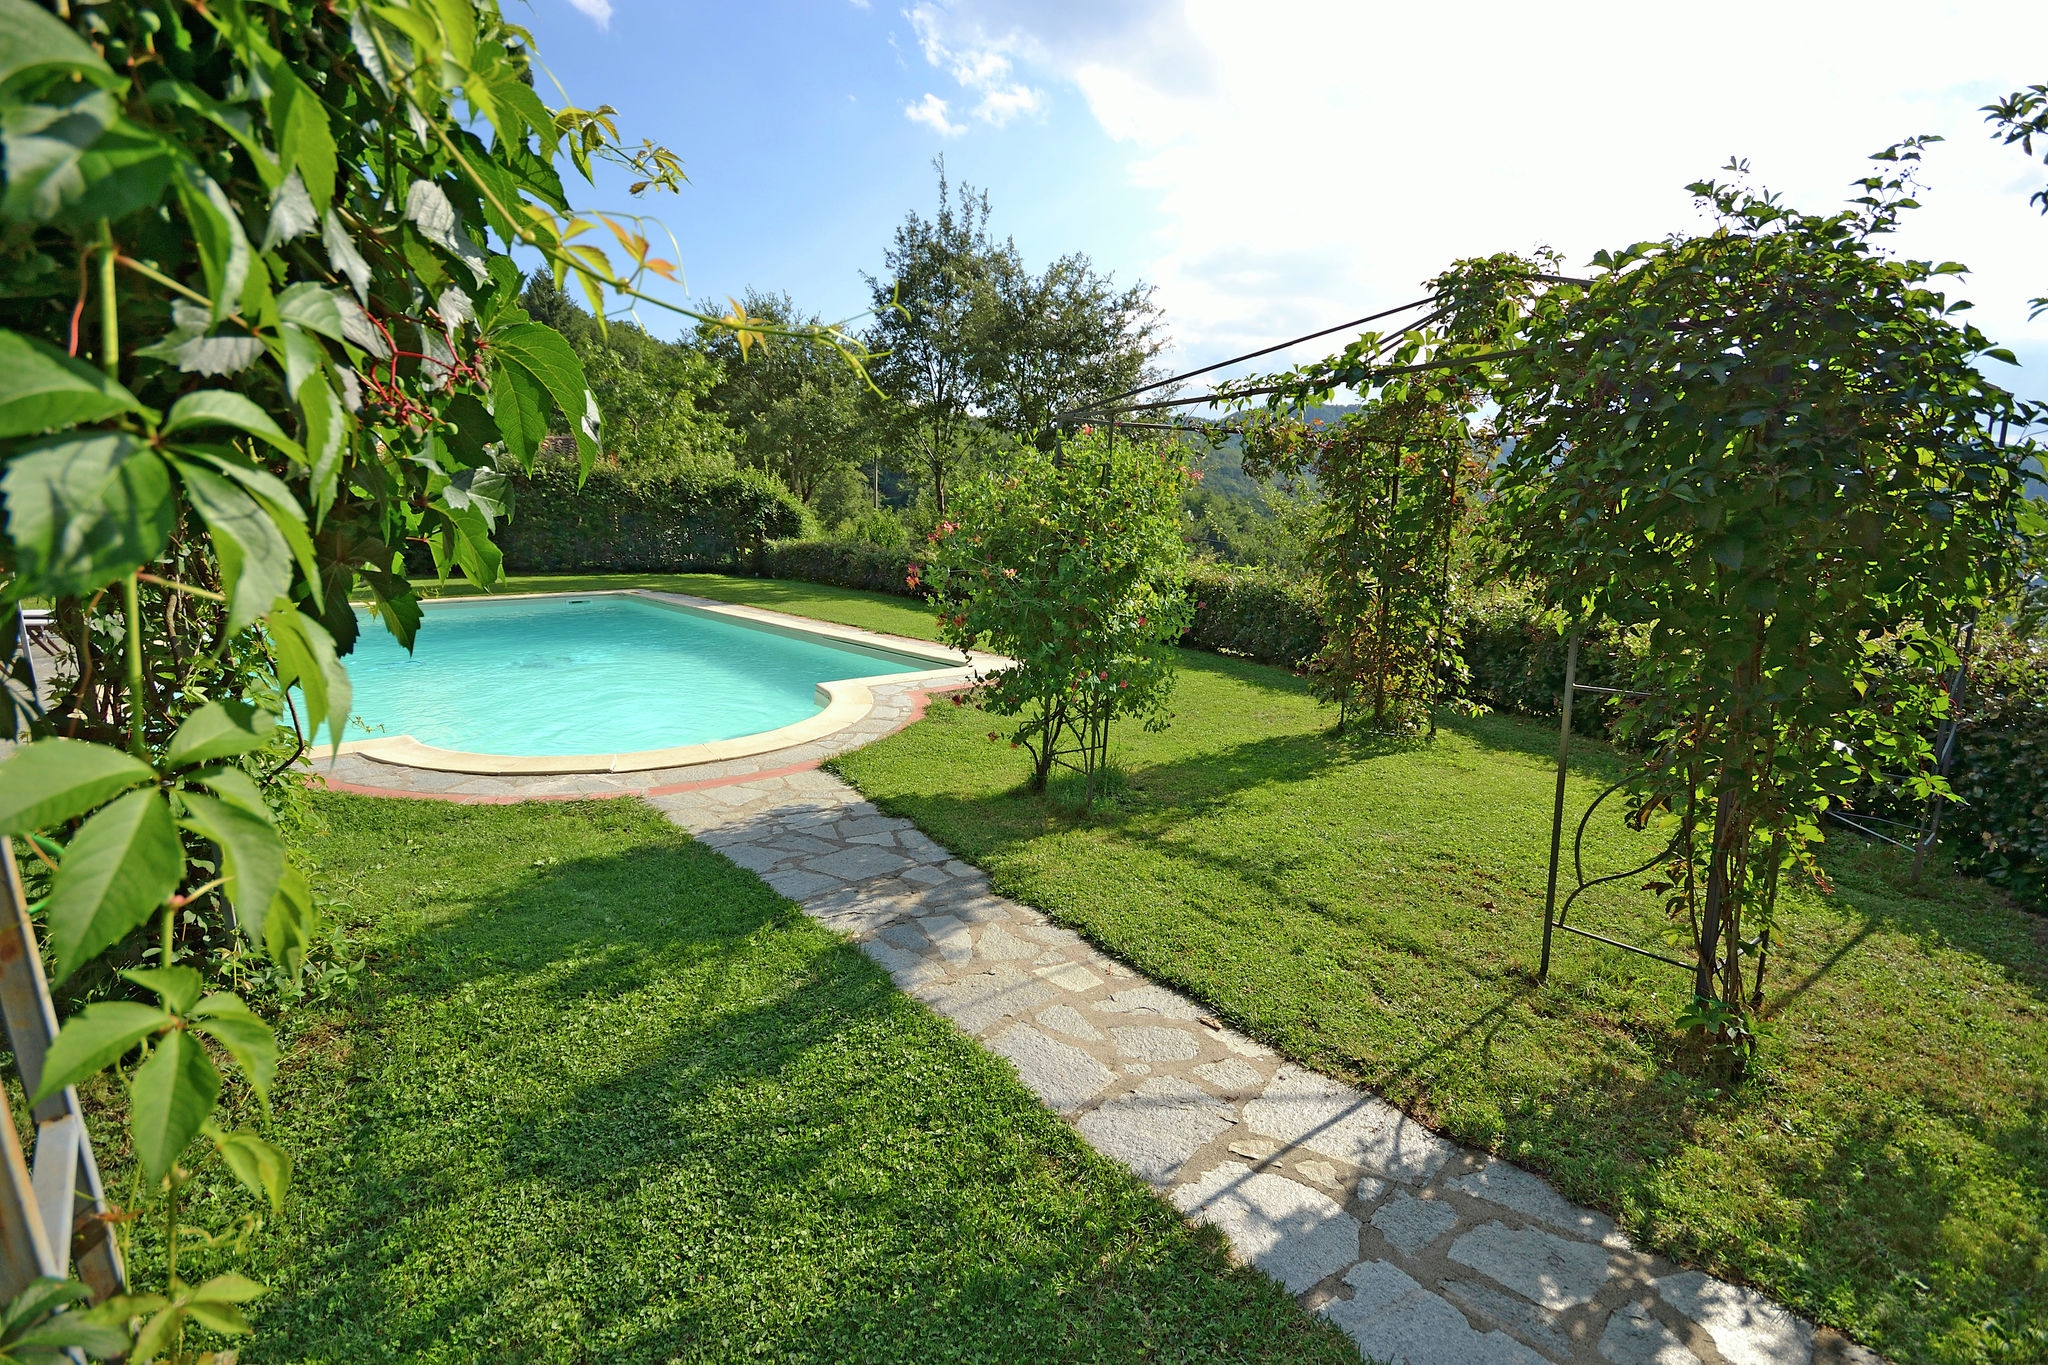 Mooie vila met privé zwembad, ruime tuin, veel privacy en dichtbij Cortona